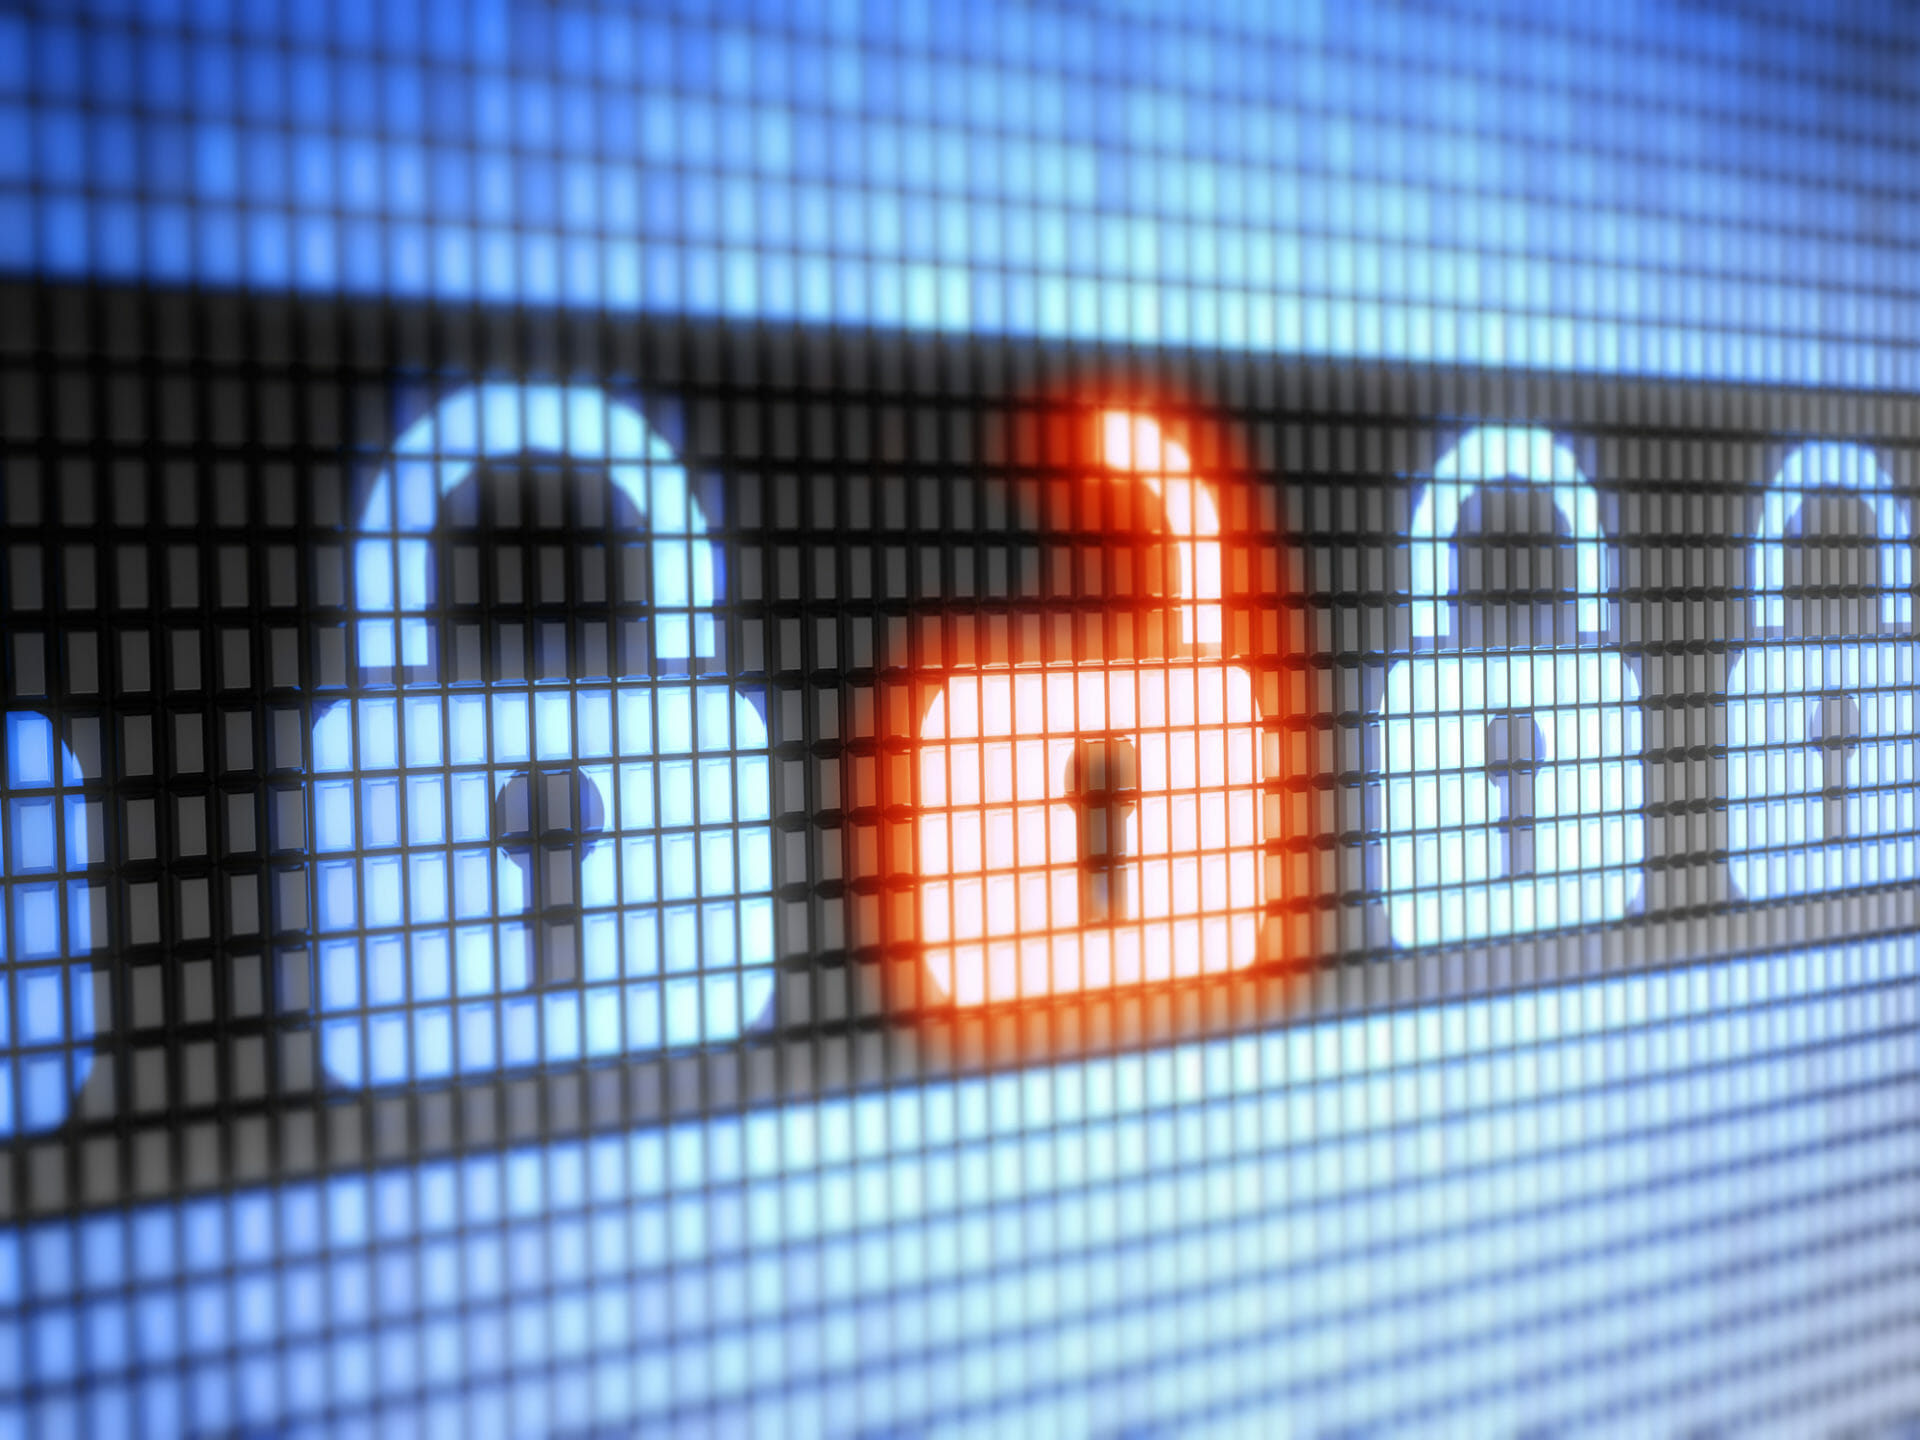 LED internet security lock and unlock symbols